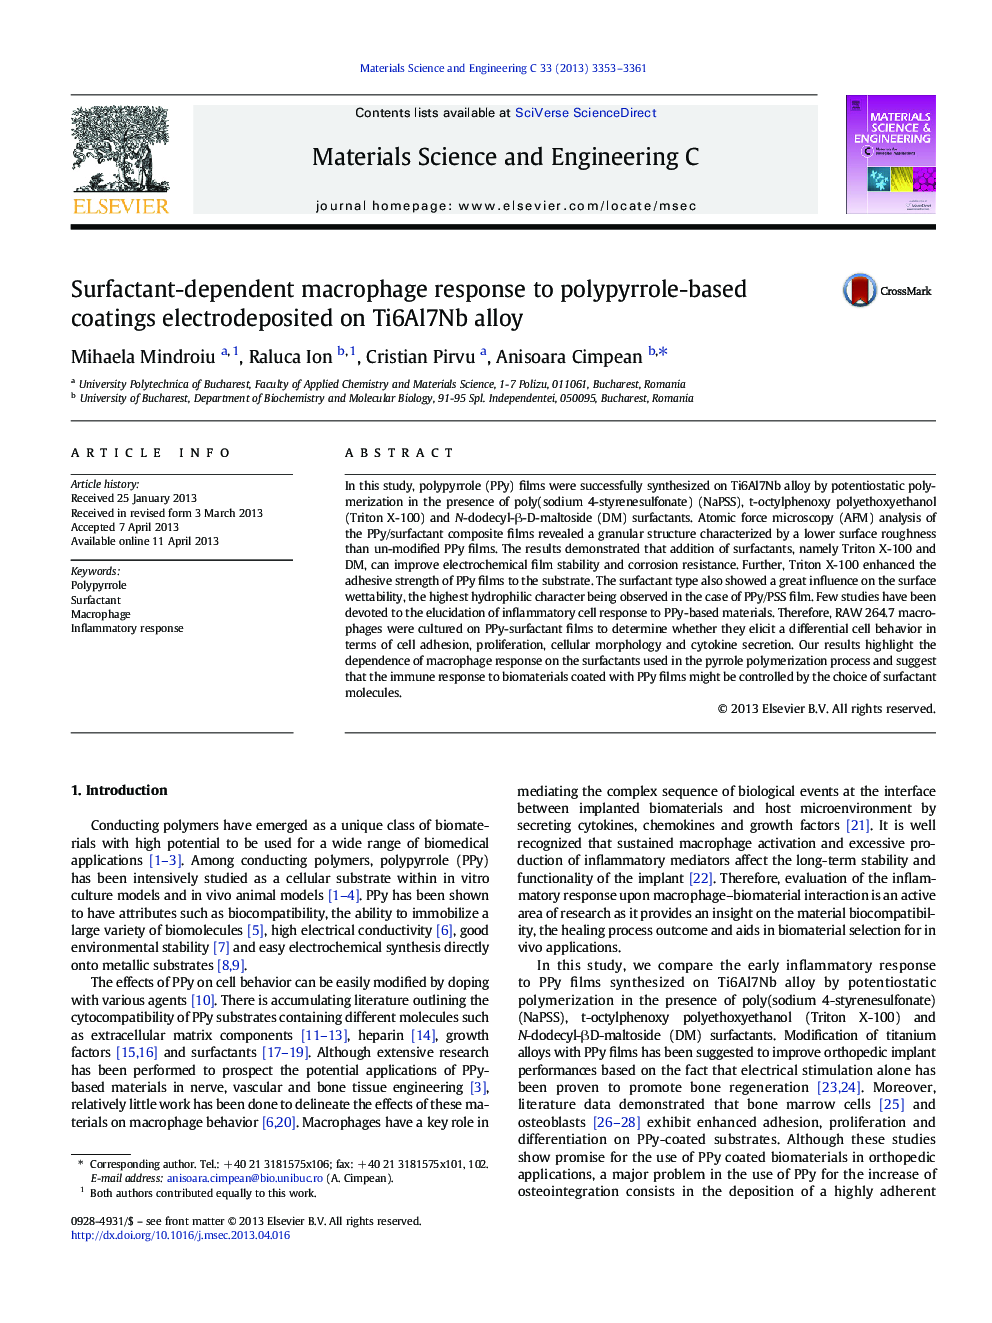 Surfactant-dependent macrophage response to polypyrrole-based coatings electrodeposited on Ti6Al7Nb alloy